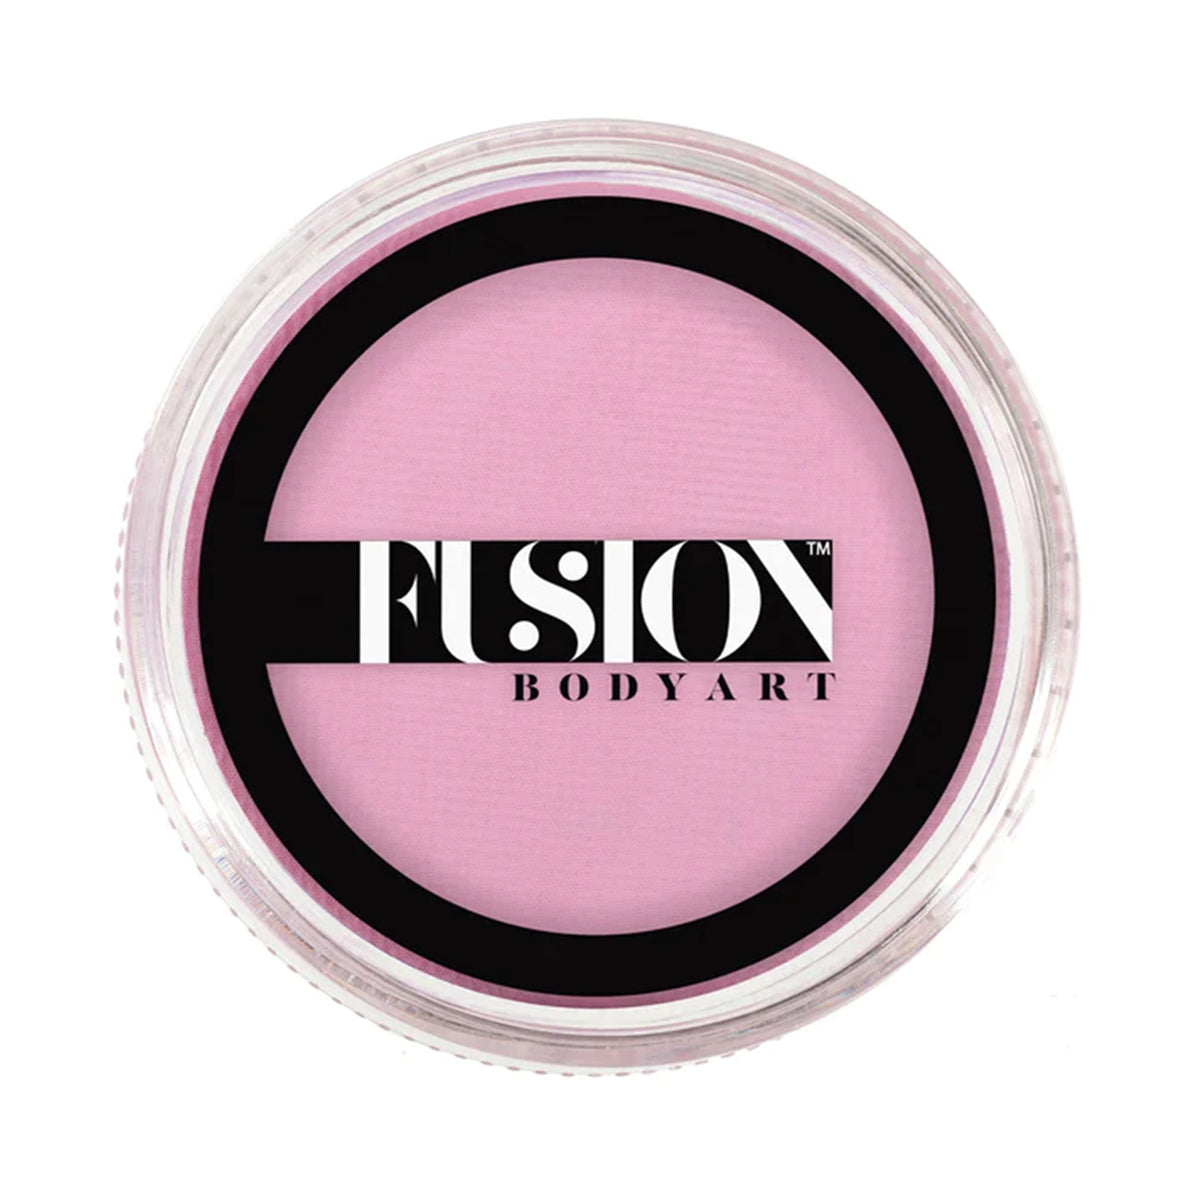 Fusion Body Art Face Paint - Prime Pastel Pink (32 gm)